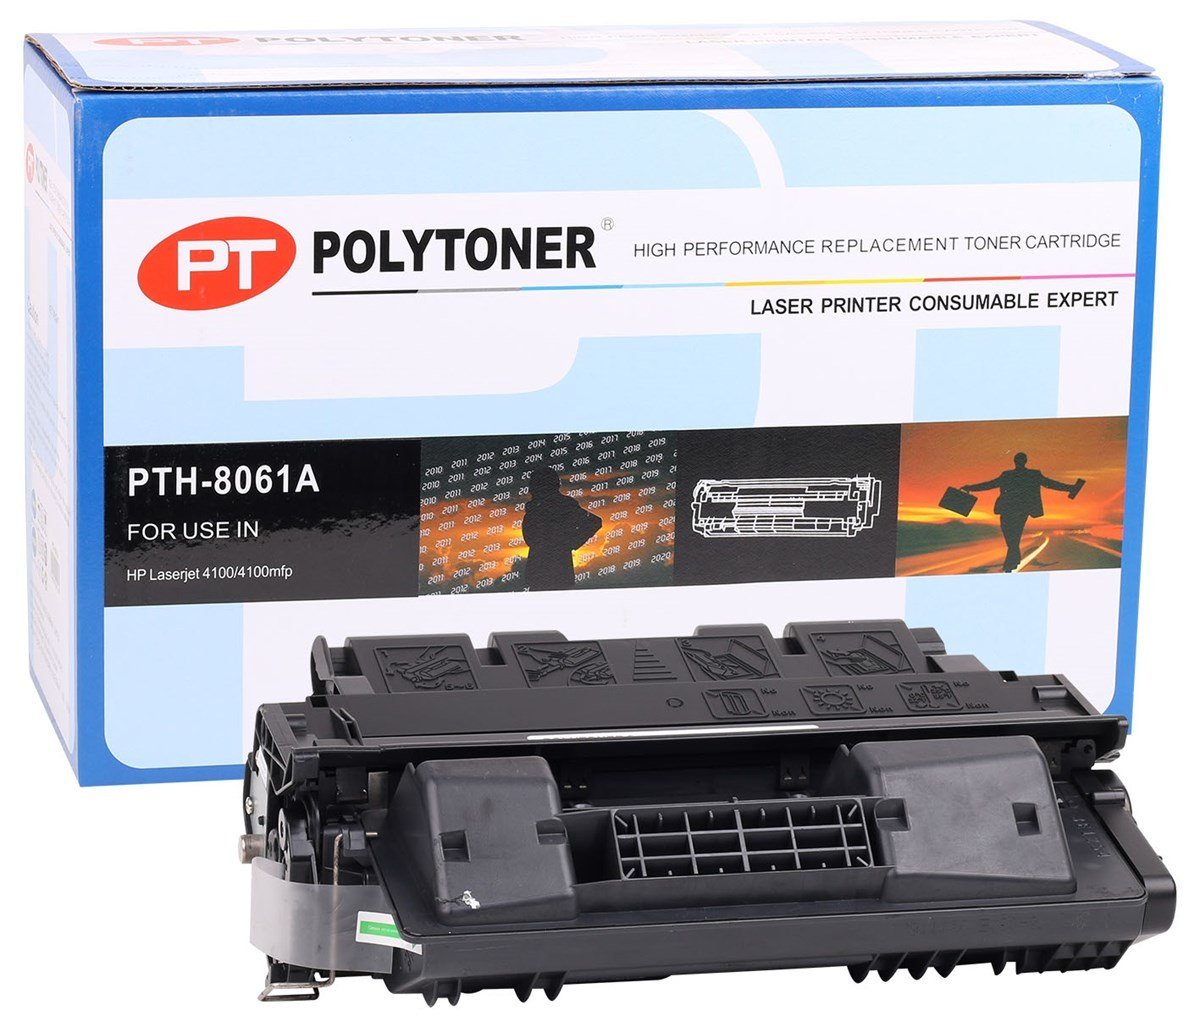 HP C8061A Polytoner Laserjet 4100 4100 mfp